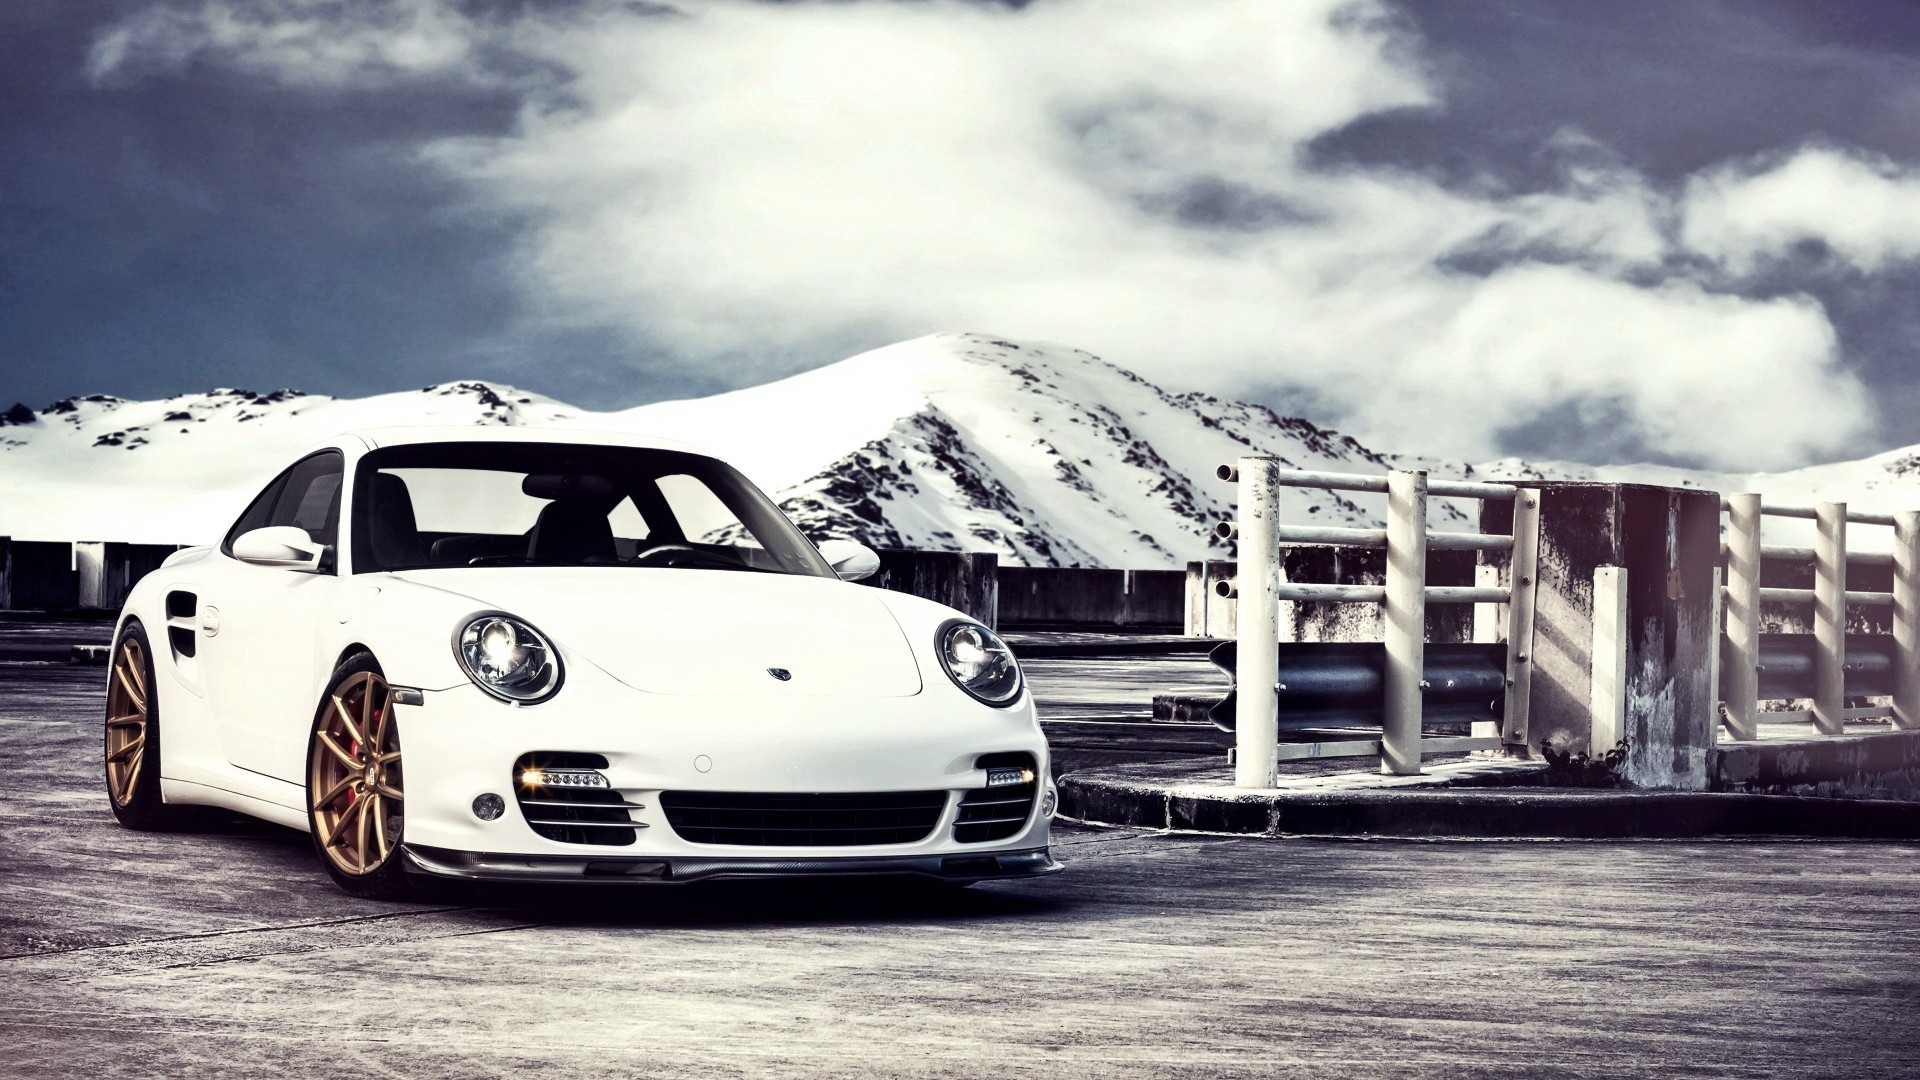 General 1920x1080 car Porsche white cars Porsche 997 Porsche 911 colored wheels vehicle snowy mountain snowy peak